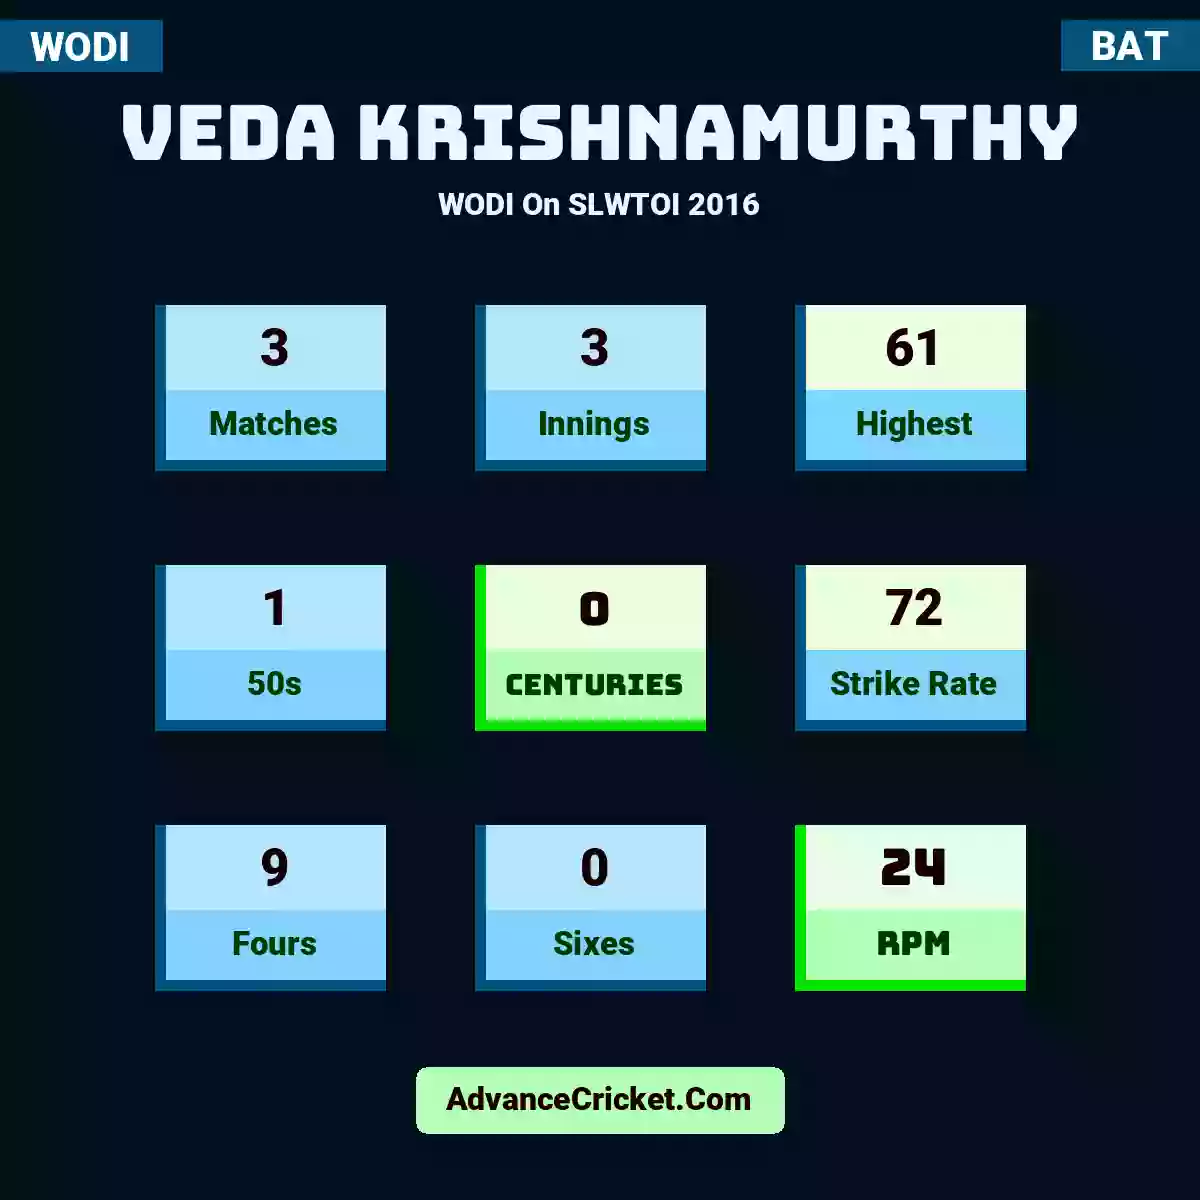 Veda Krishnamurthy WODI  On SLWTOI 2016, Veda Krishnamurthy played 3 matches, scored 61 runs as highest, 1 half-centuries, and 0 centuries, with a strike rate of 72. V.Krishnamurthy hit 9 fours and 0 sixes, with an RPM of 24.